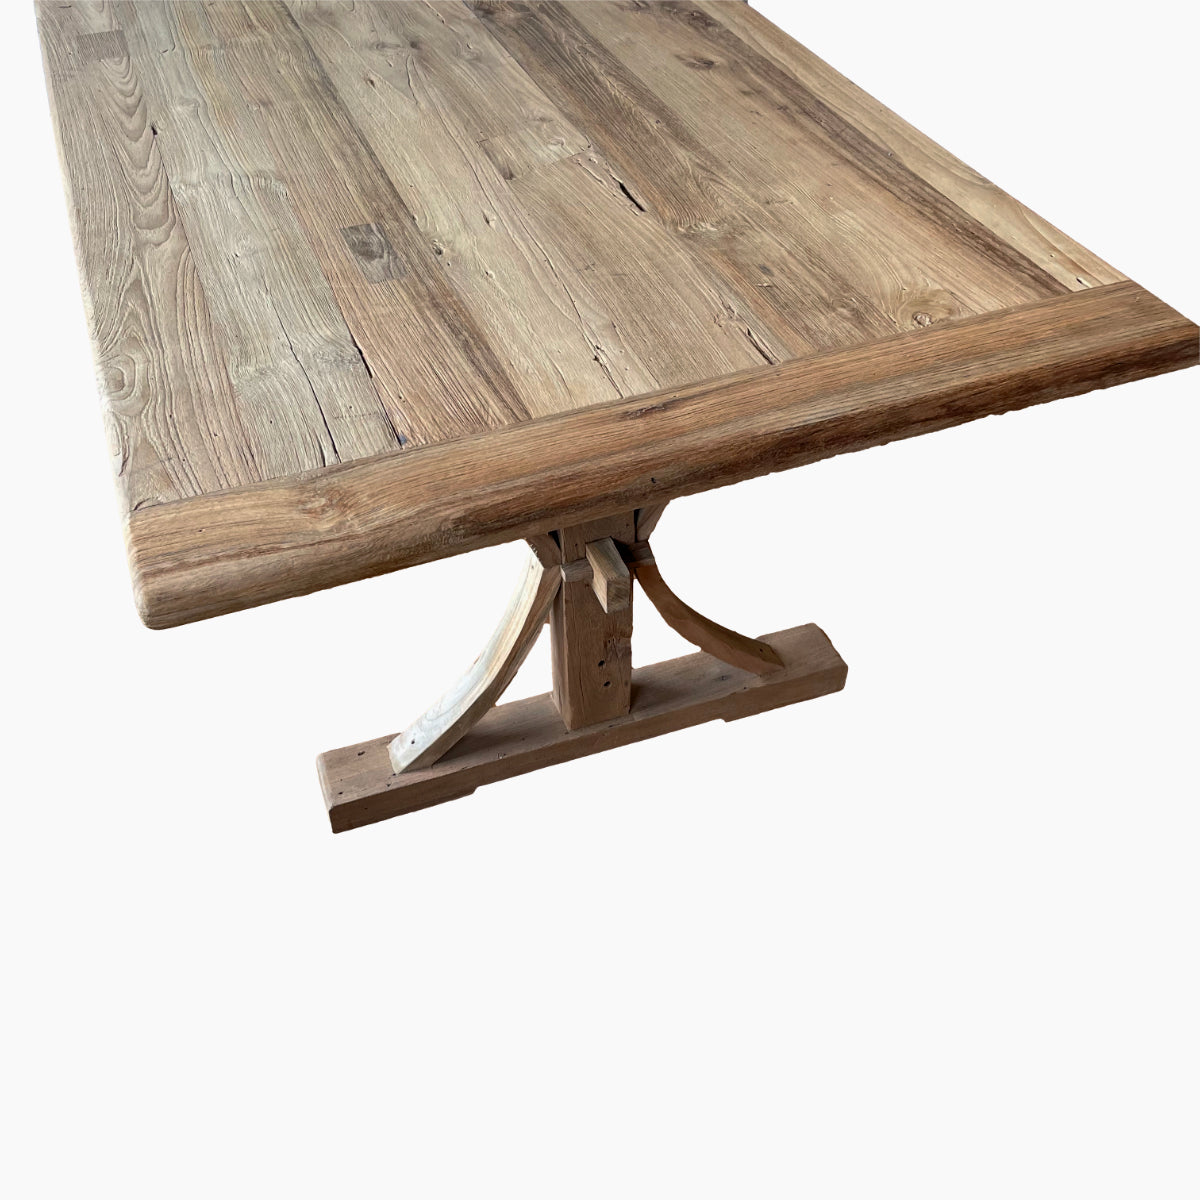 Teak Timber Curved Cross Leg Dining Table 2.5m x 1m